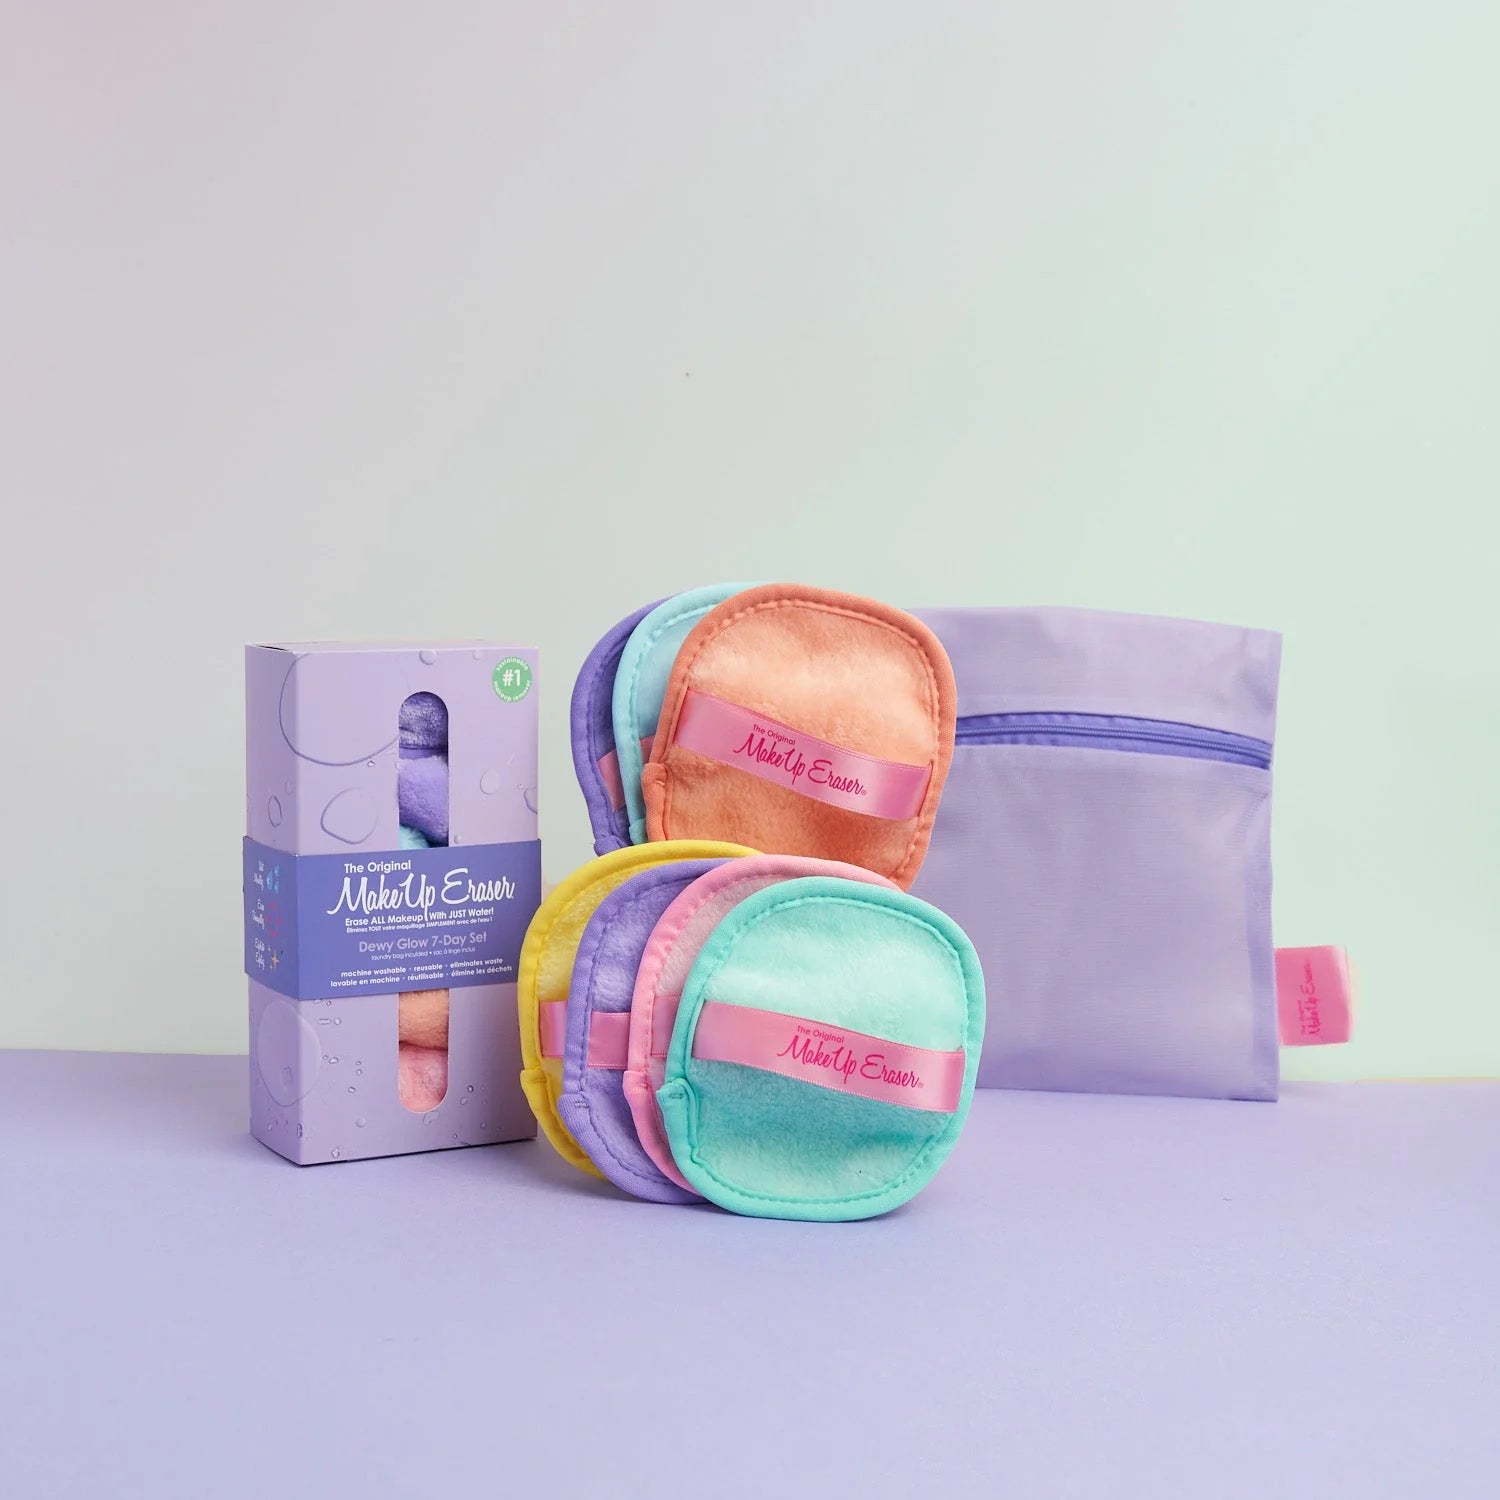 MakeUp Eraser - Dewy Glow 7-Day Set